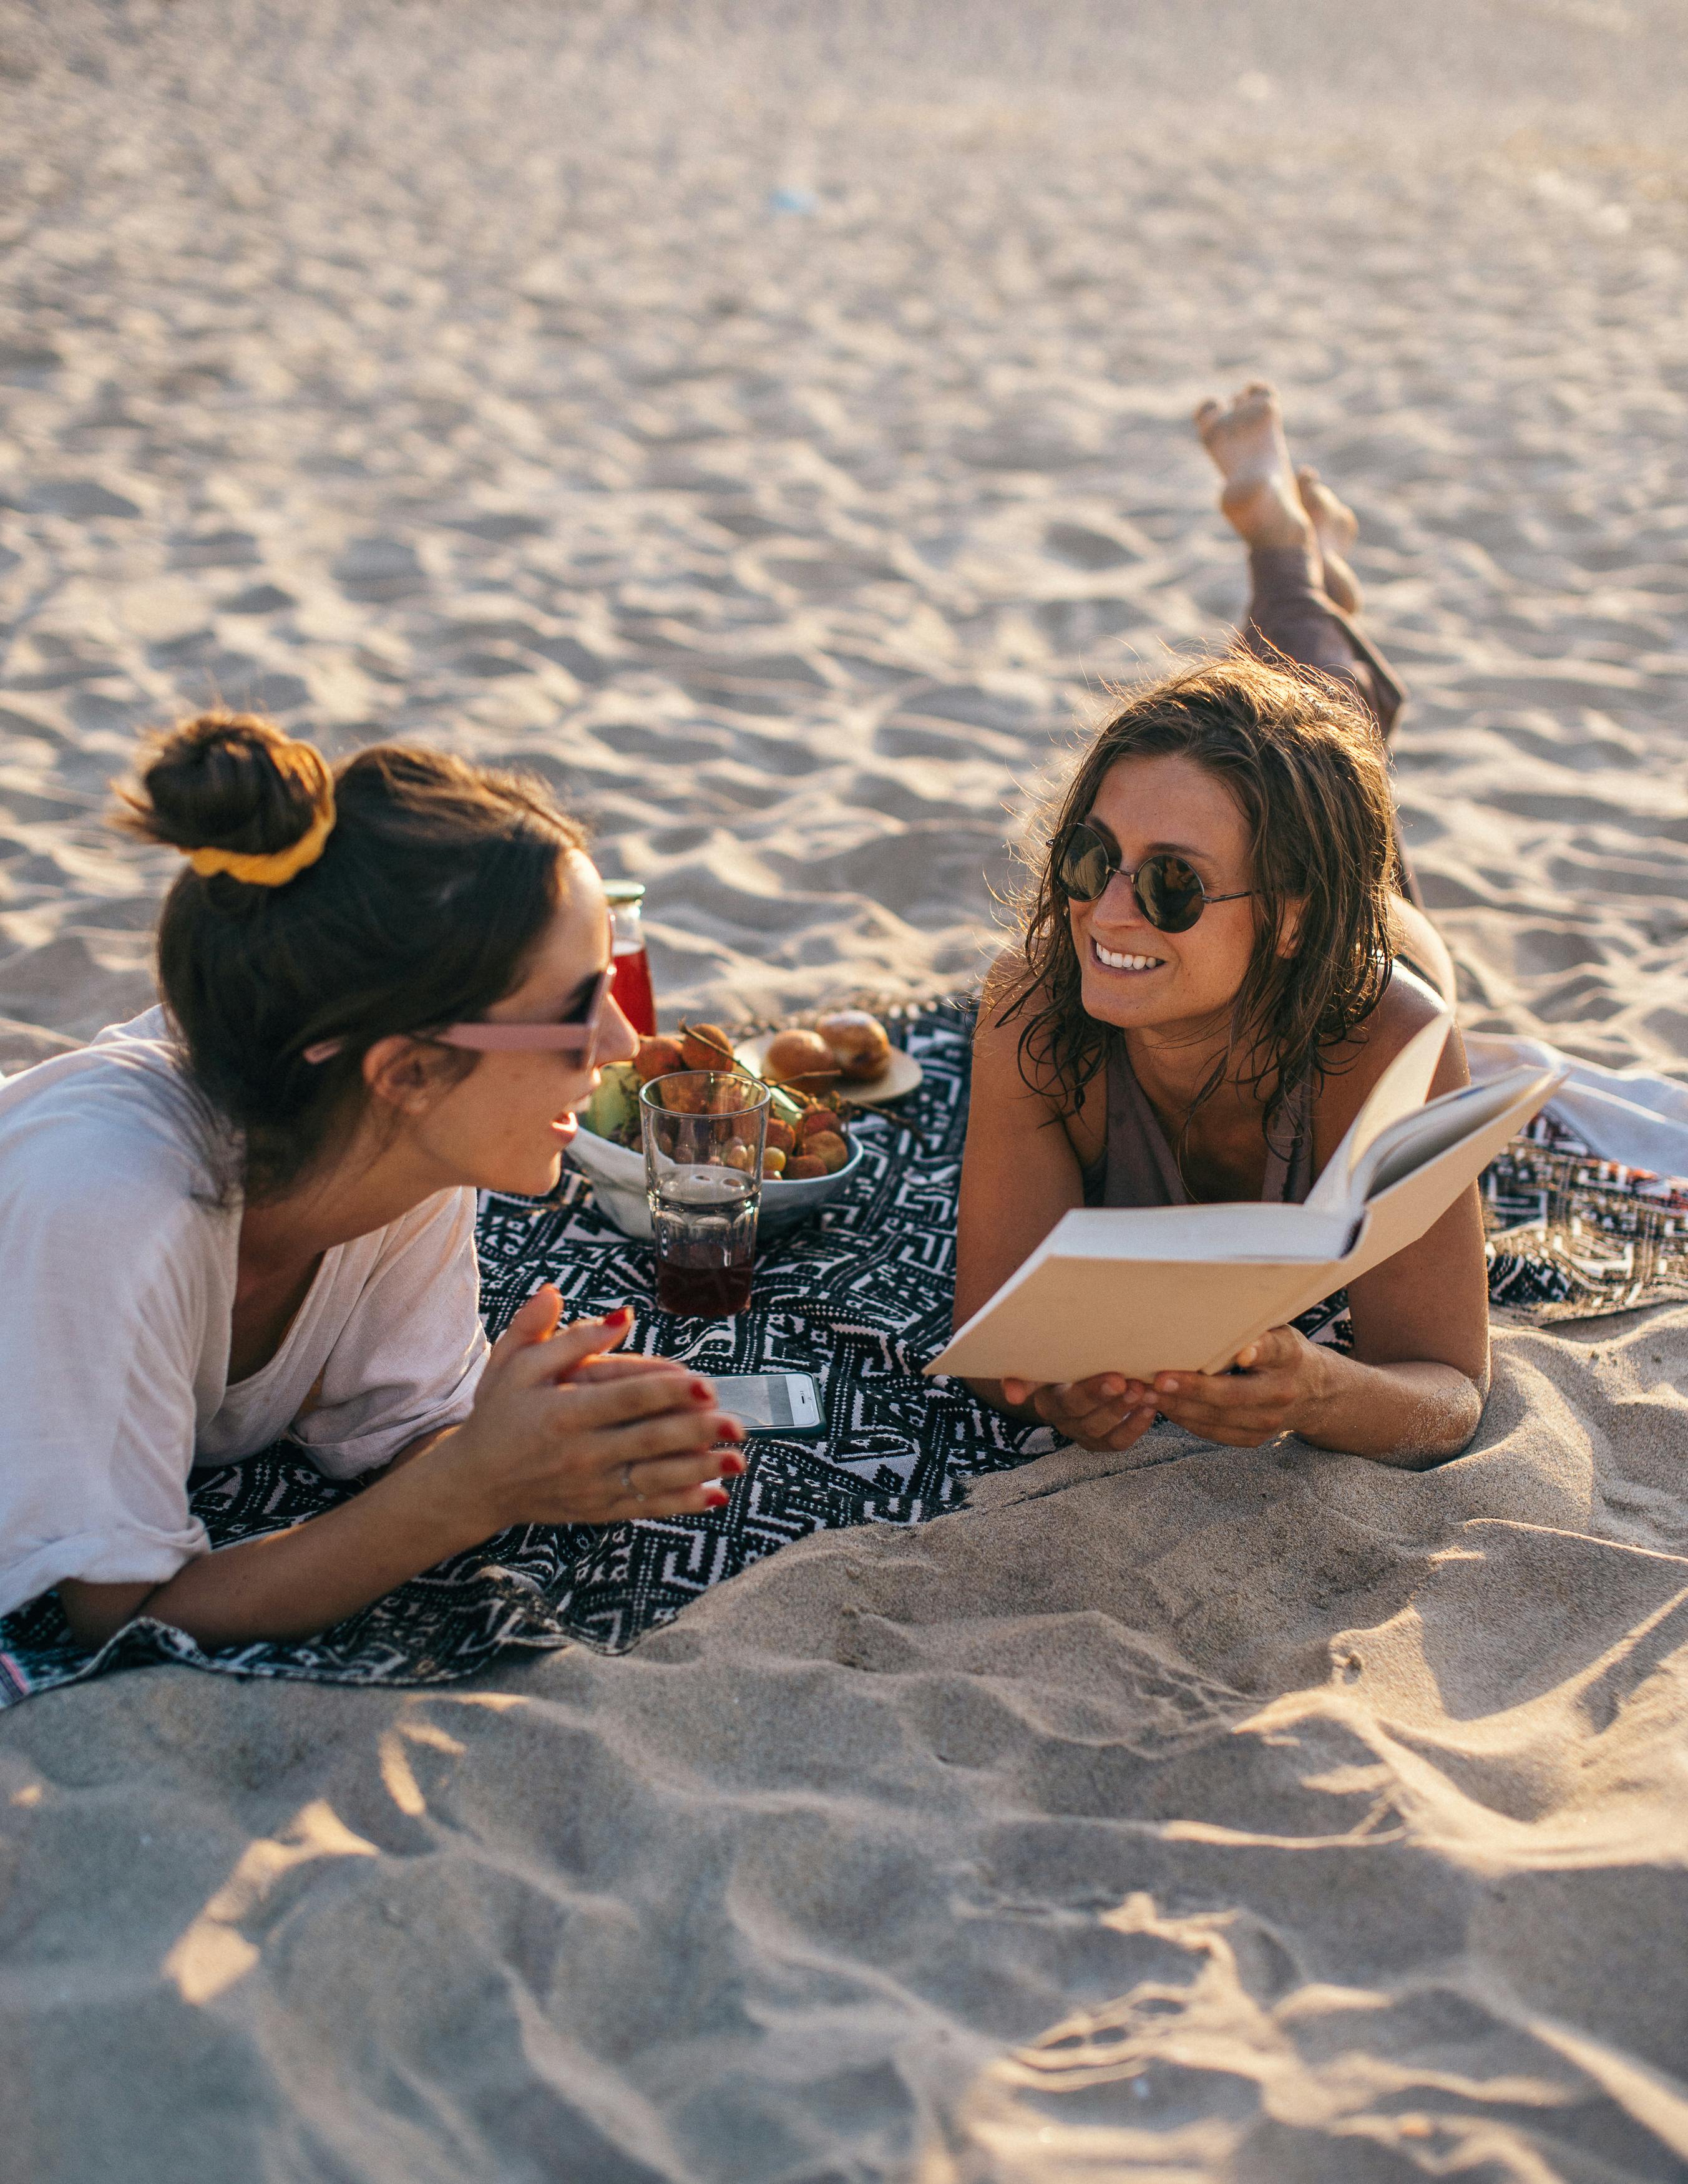 Best friends chatting on the beach | Source: Anna Tarazevich on Pexels